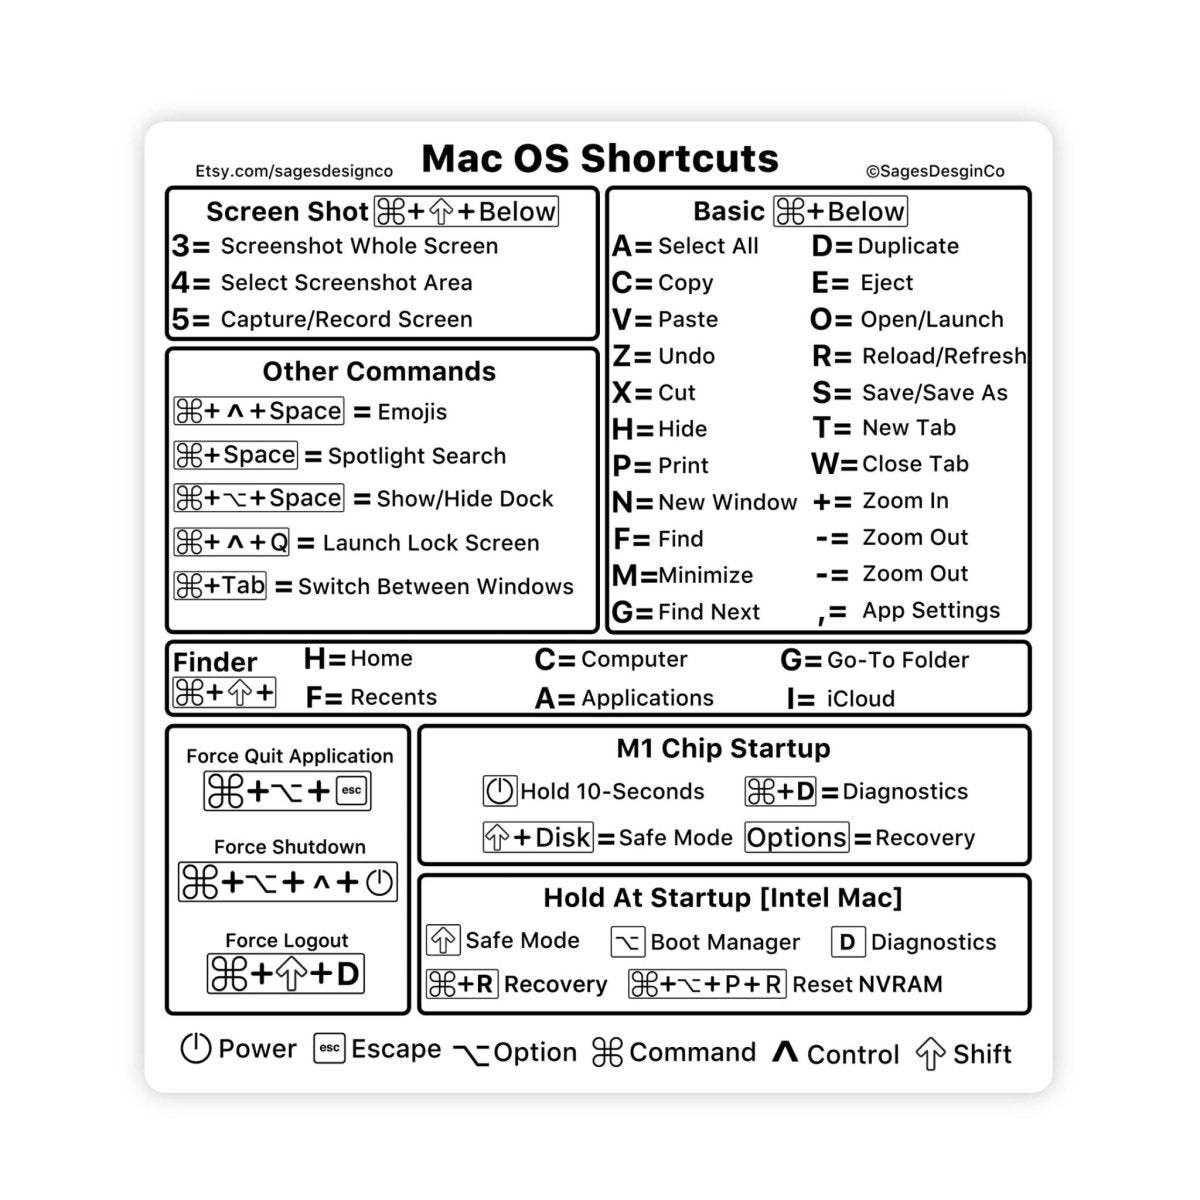 [M1/M2/Intel] Pink Mac OS Shortcut Sticker [Works With All Mac Laptops] - stickerbull[M1/M2/Intel] Pink Mac OS Shortcut Sticker [Works With All Mac Laptops]Retail StickerstickerbullstickerbullTaylor_ClearMac [#79]Clear[M1/M2/Intel] Pink Mac OS Shortcut Sticker [Works With All Mac Laptops]